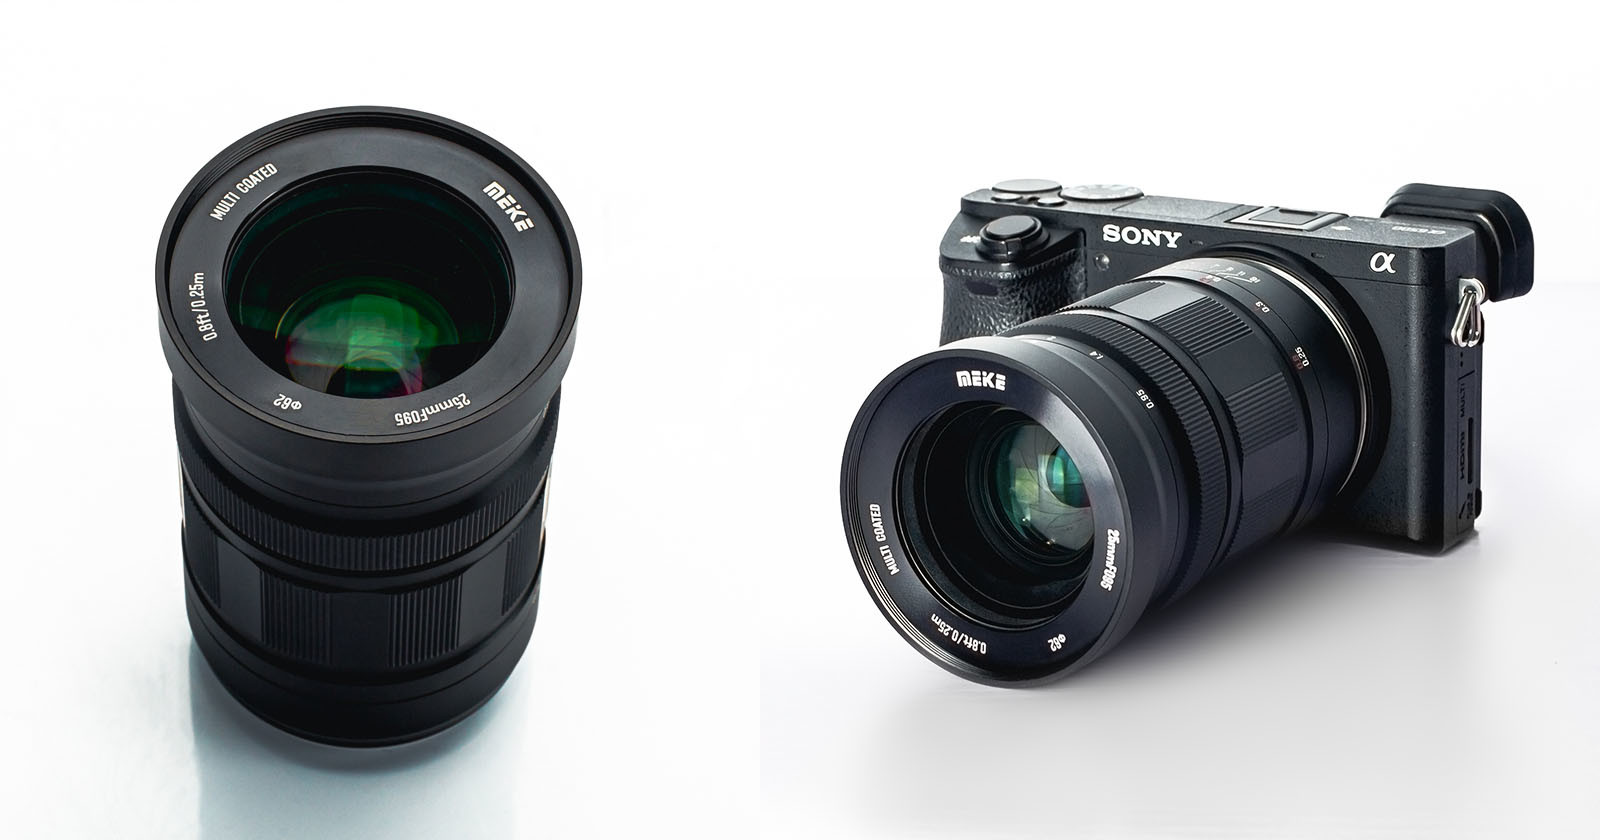  meike introduces 25mm lens aps-c cameras 